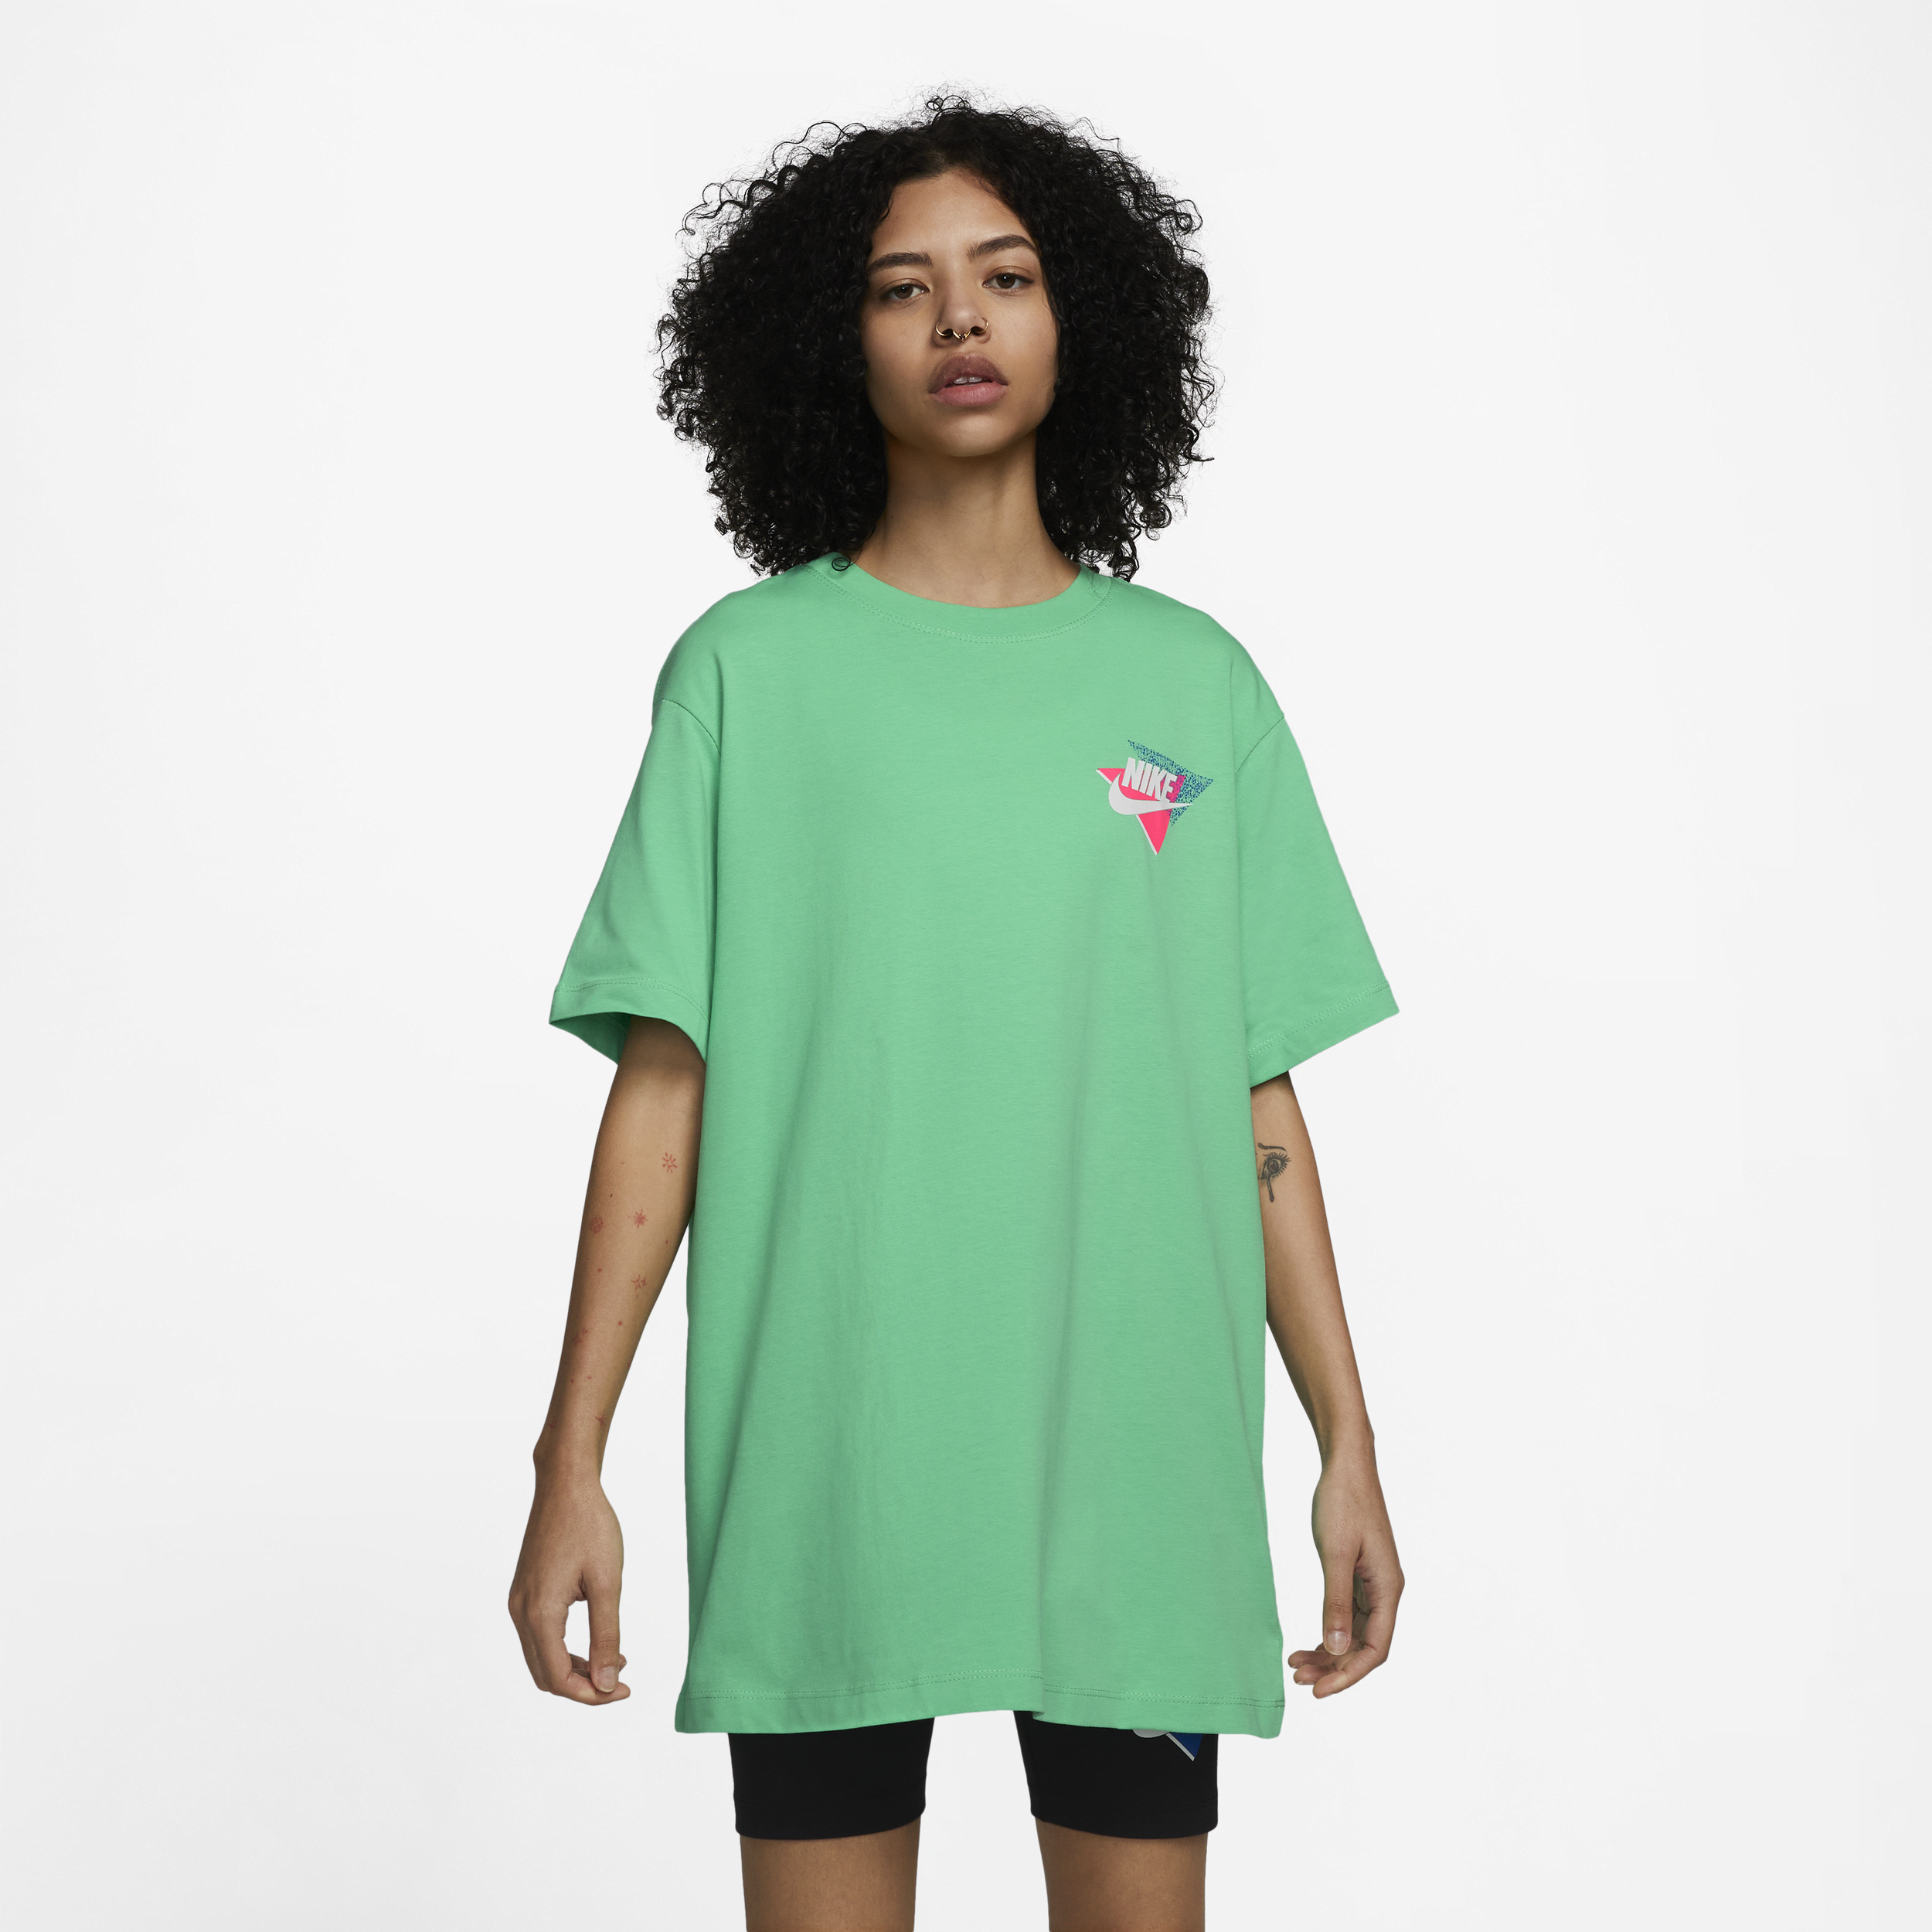 Nike Sportswear-T-shirt til kvinder - grøn